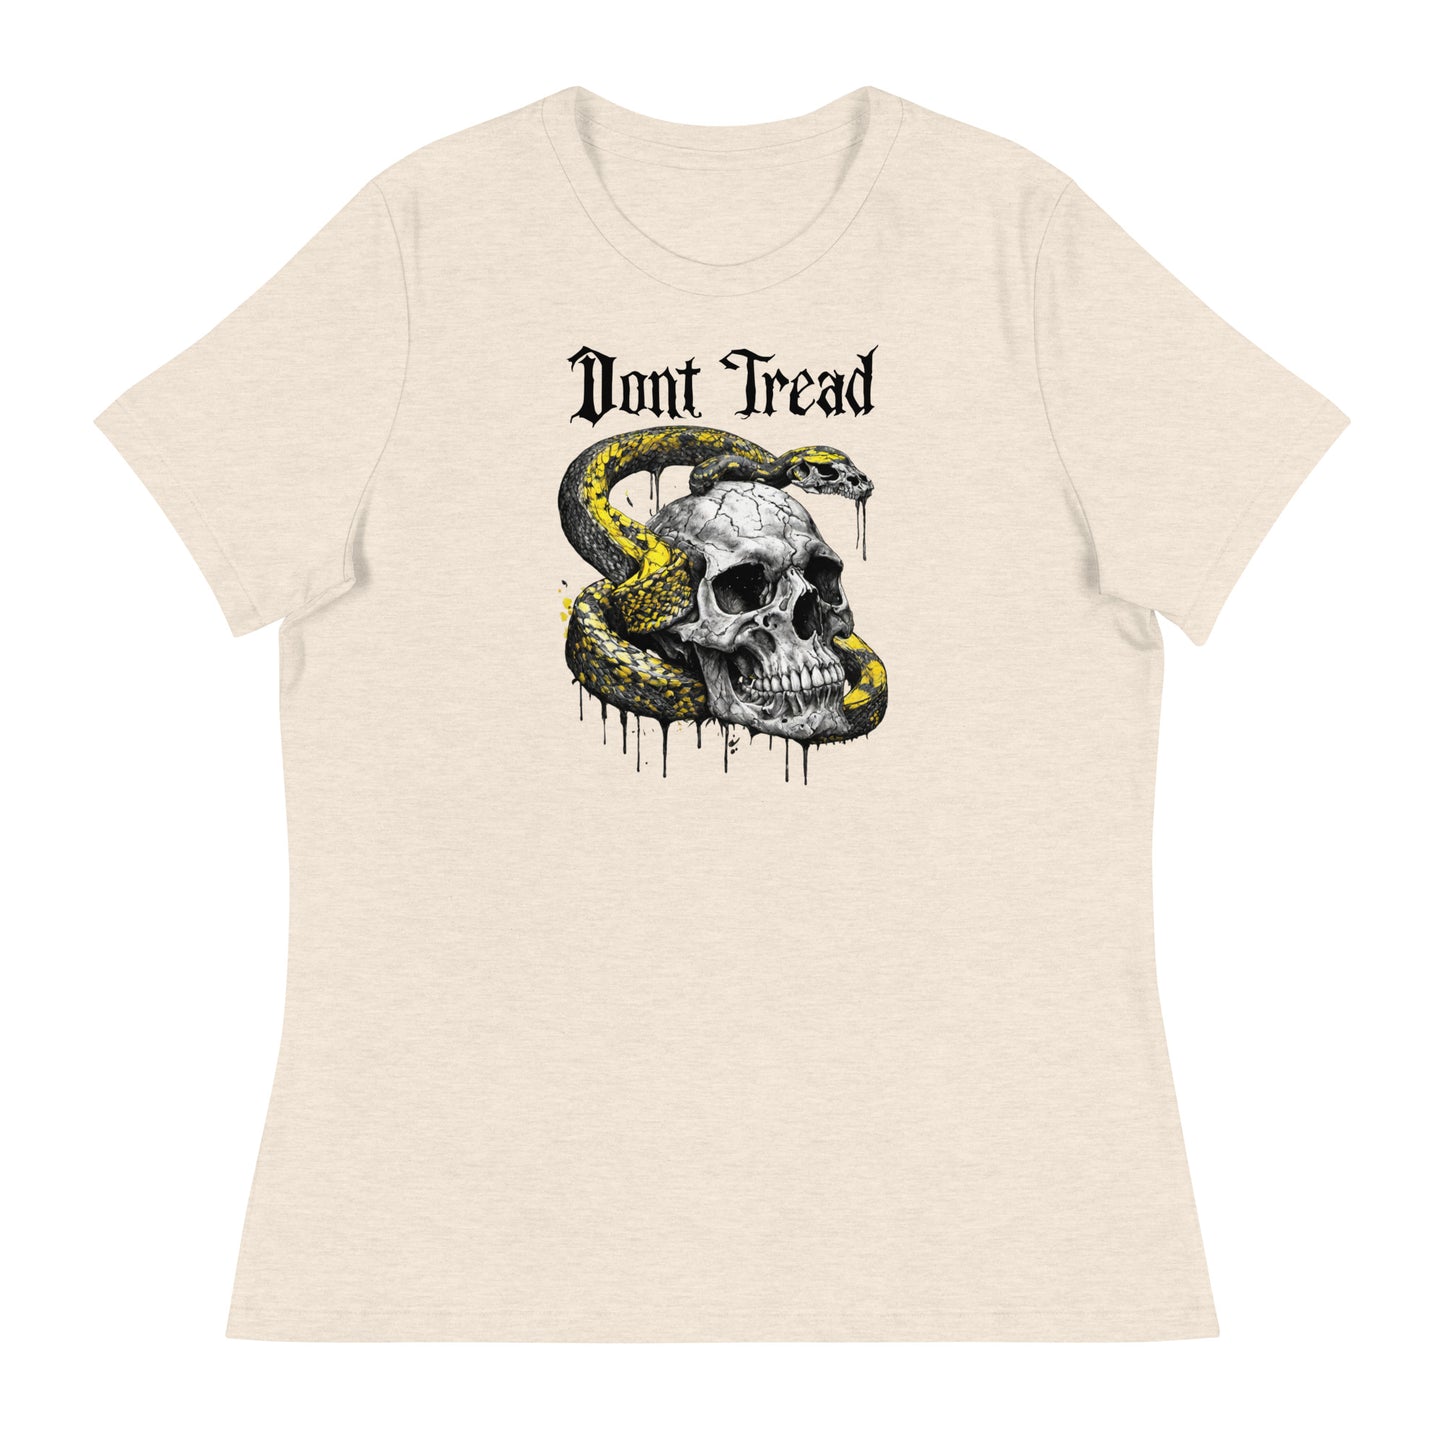 Don't Tread Snake & Skull 2nd Amendment Women's T-Shirt Heather Prism Natural